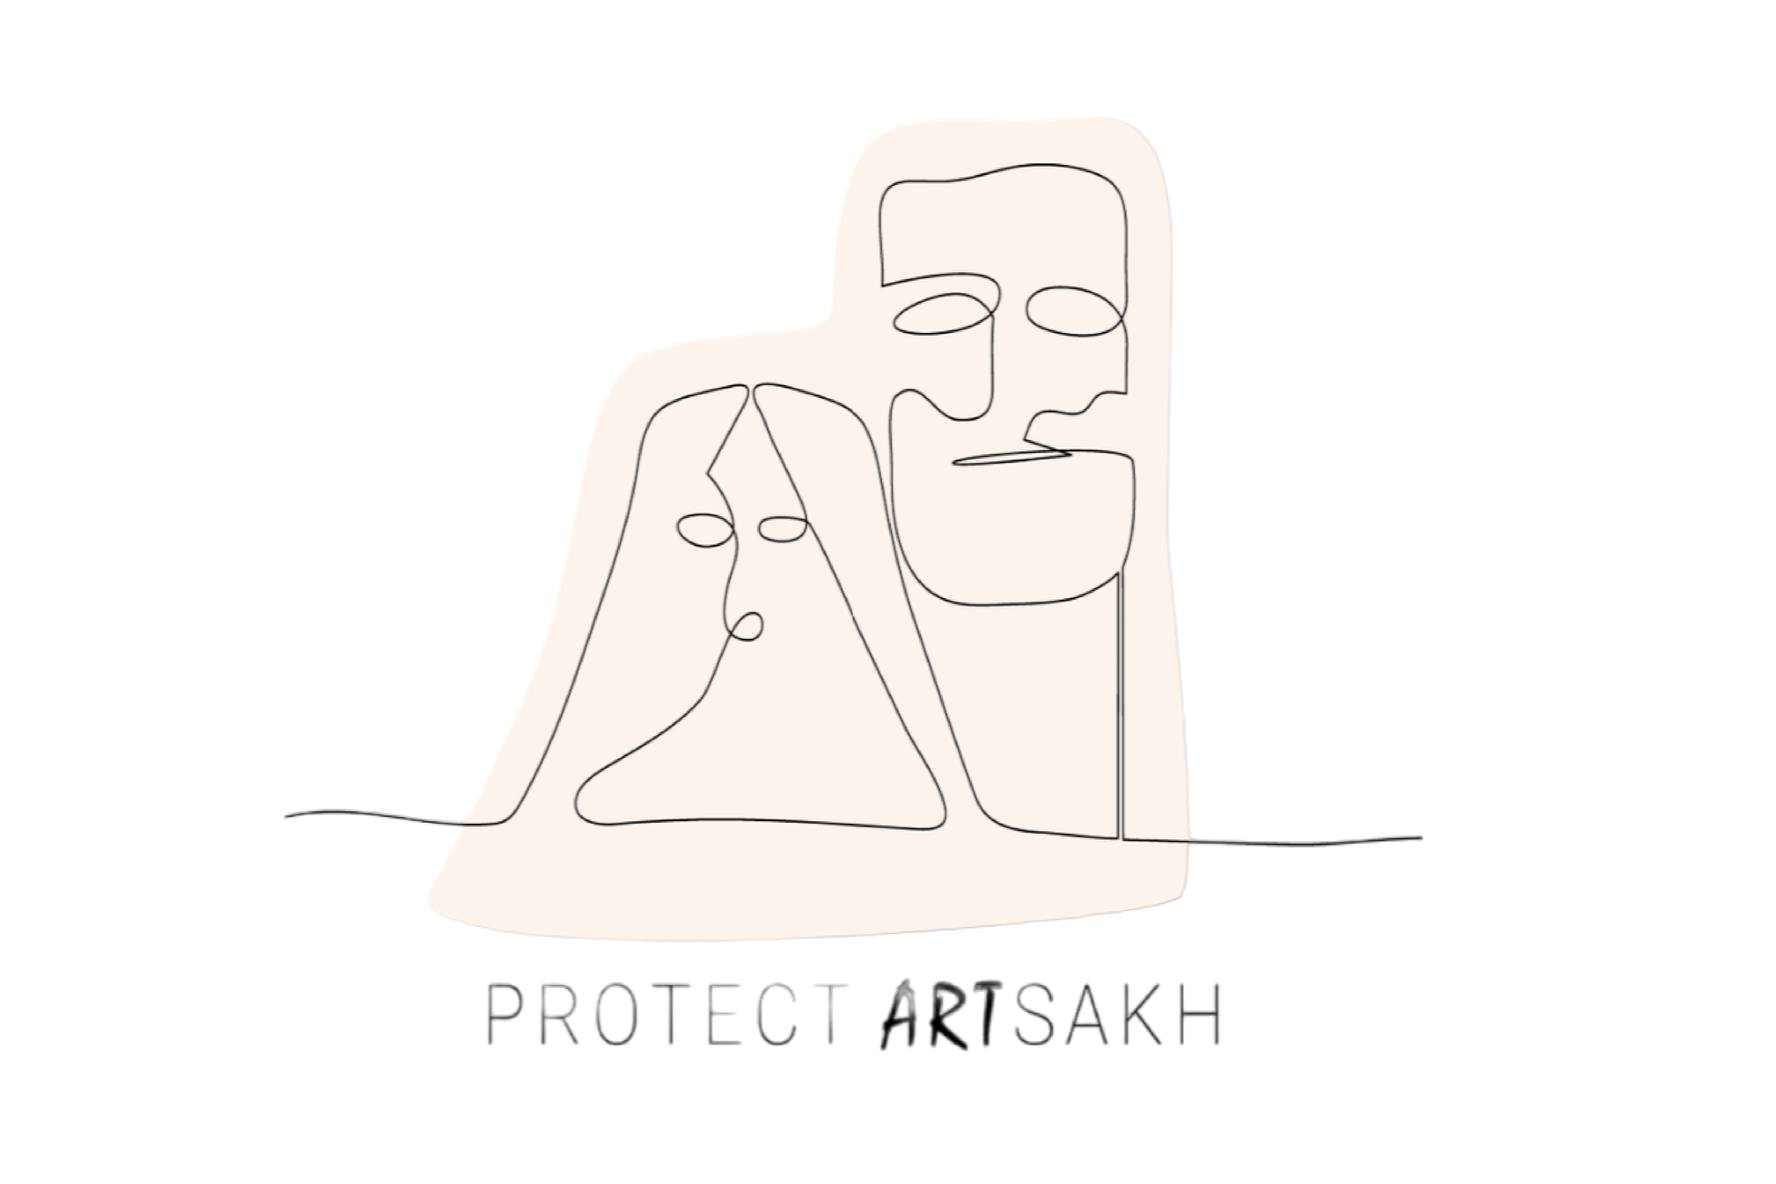 PROTECT ARTSAKH